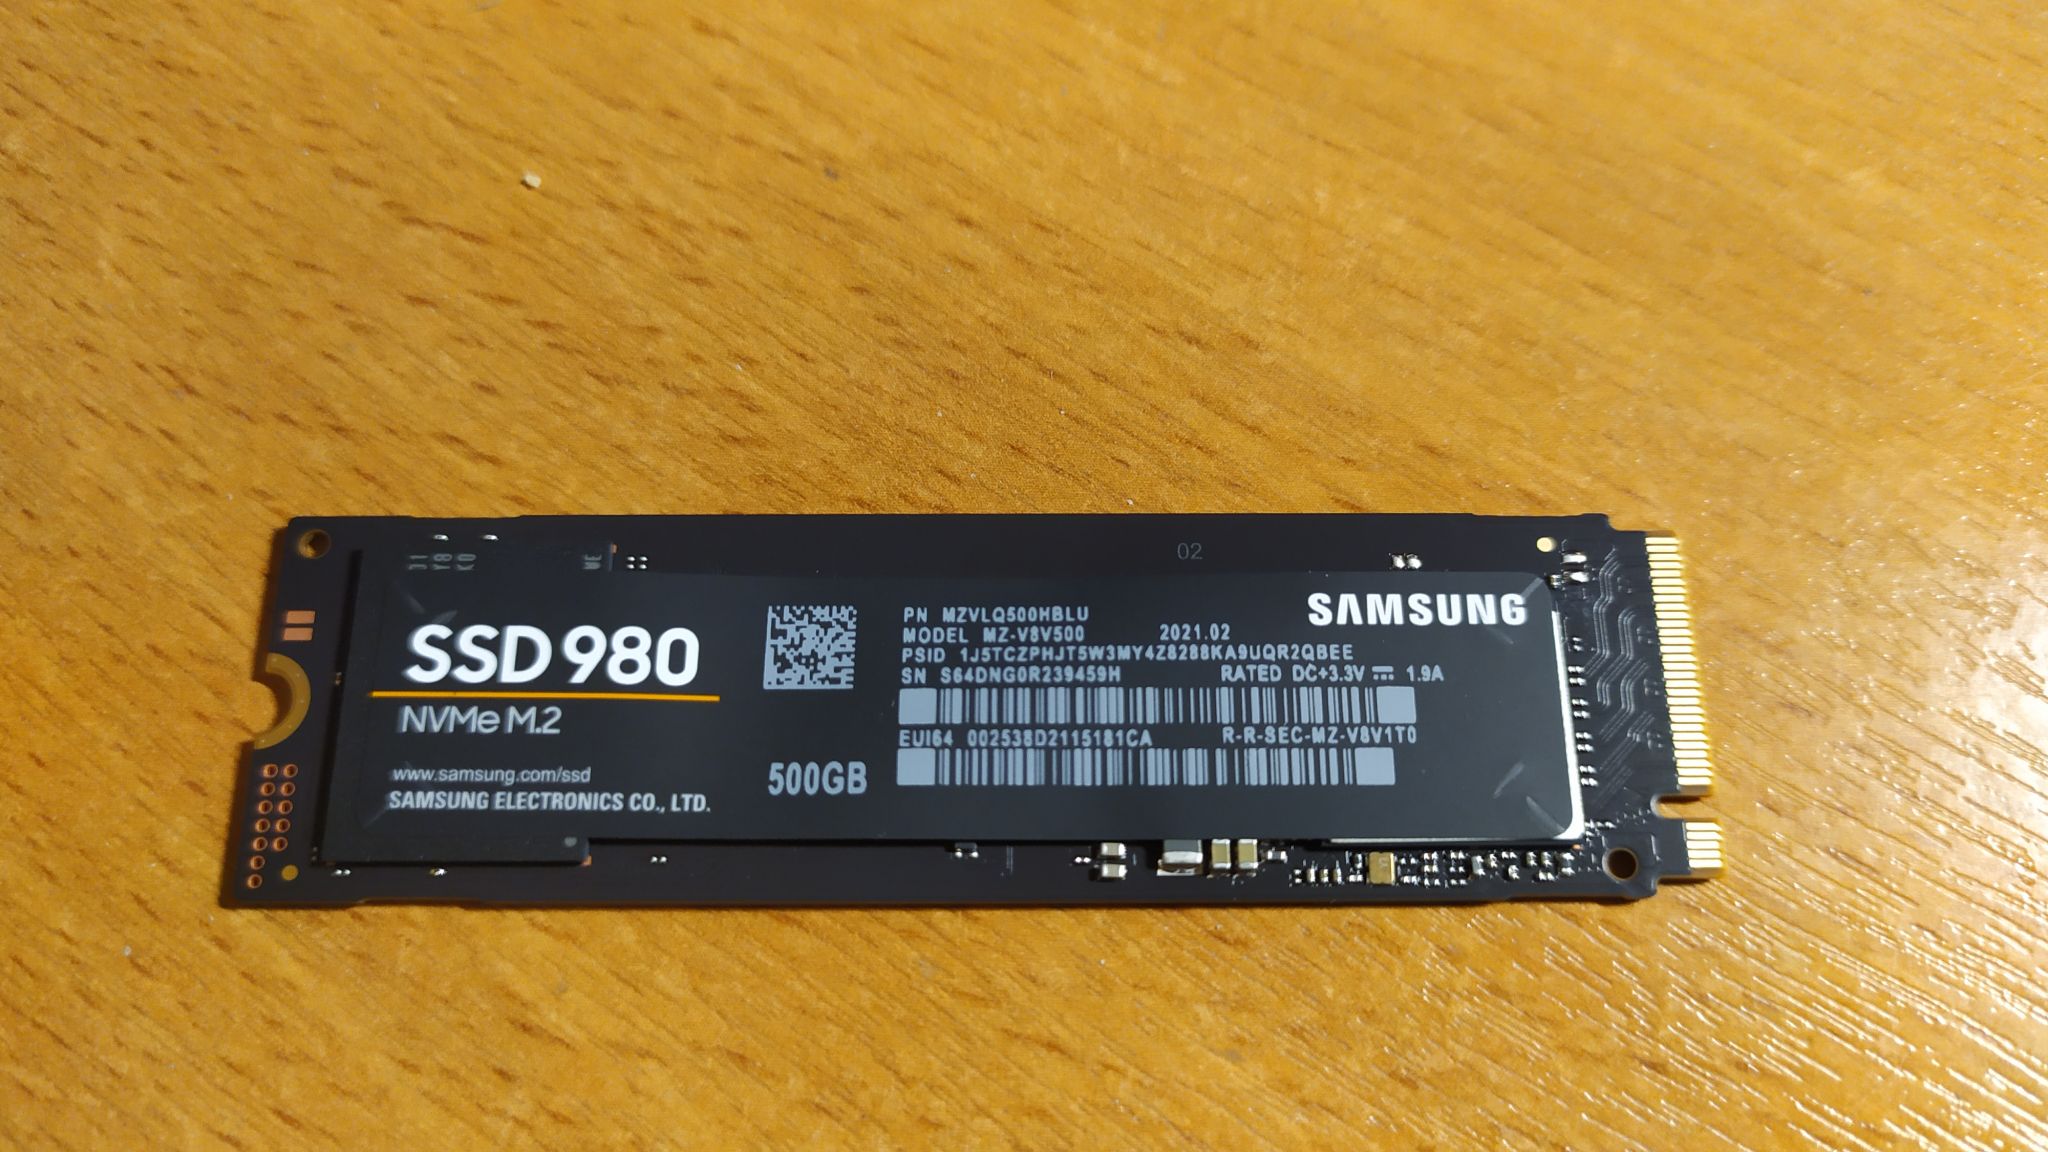 Ssd накопитель samsung 980 m 2 2280. SSD m2 Samsung 980. SSD Samsung 980 EVO. SSD Samsung 980 MZ v8v500bw. Samsung SSD 500gb 980 m.2 MZ-v8v500bw.